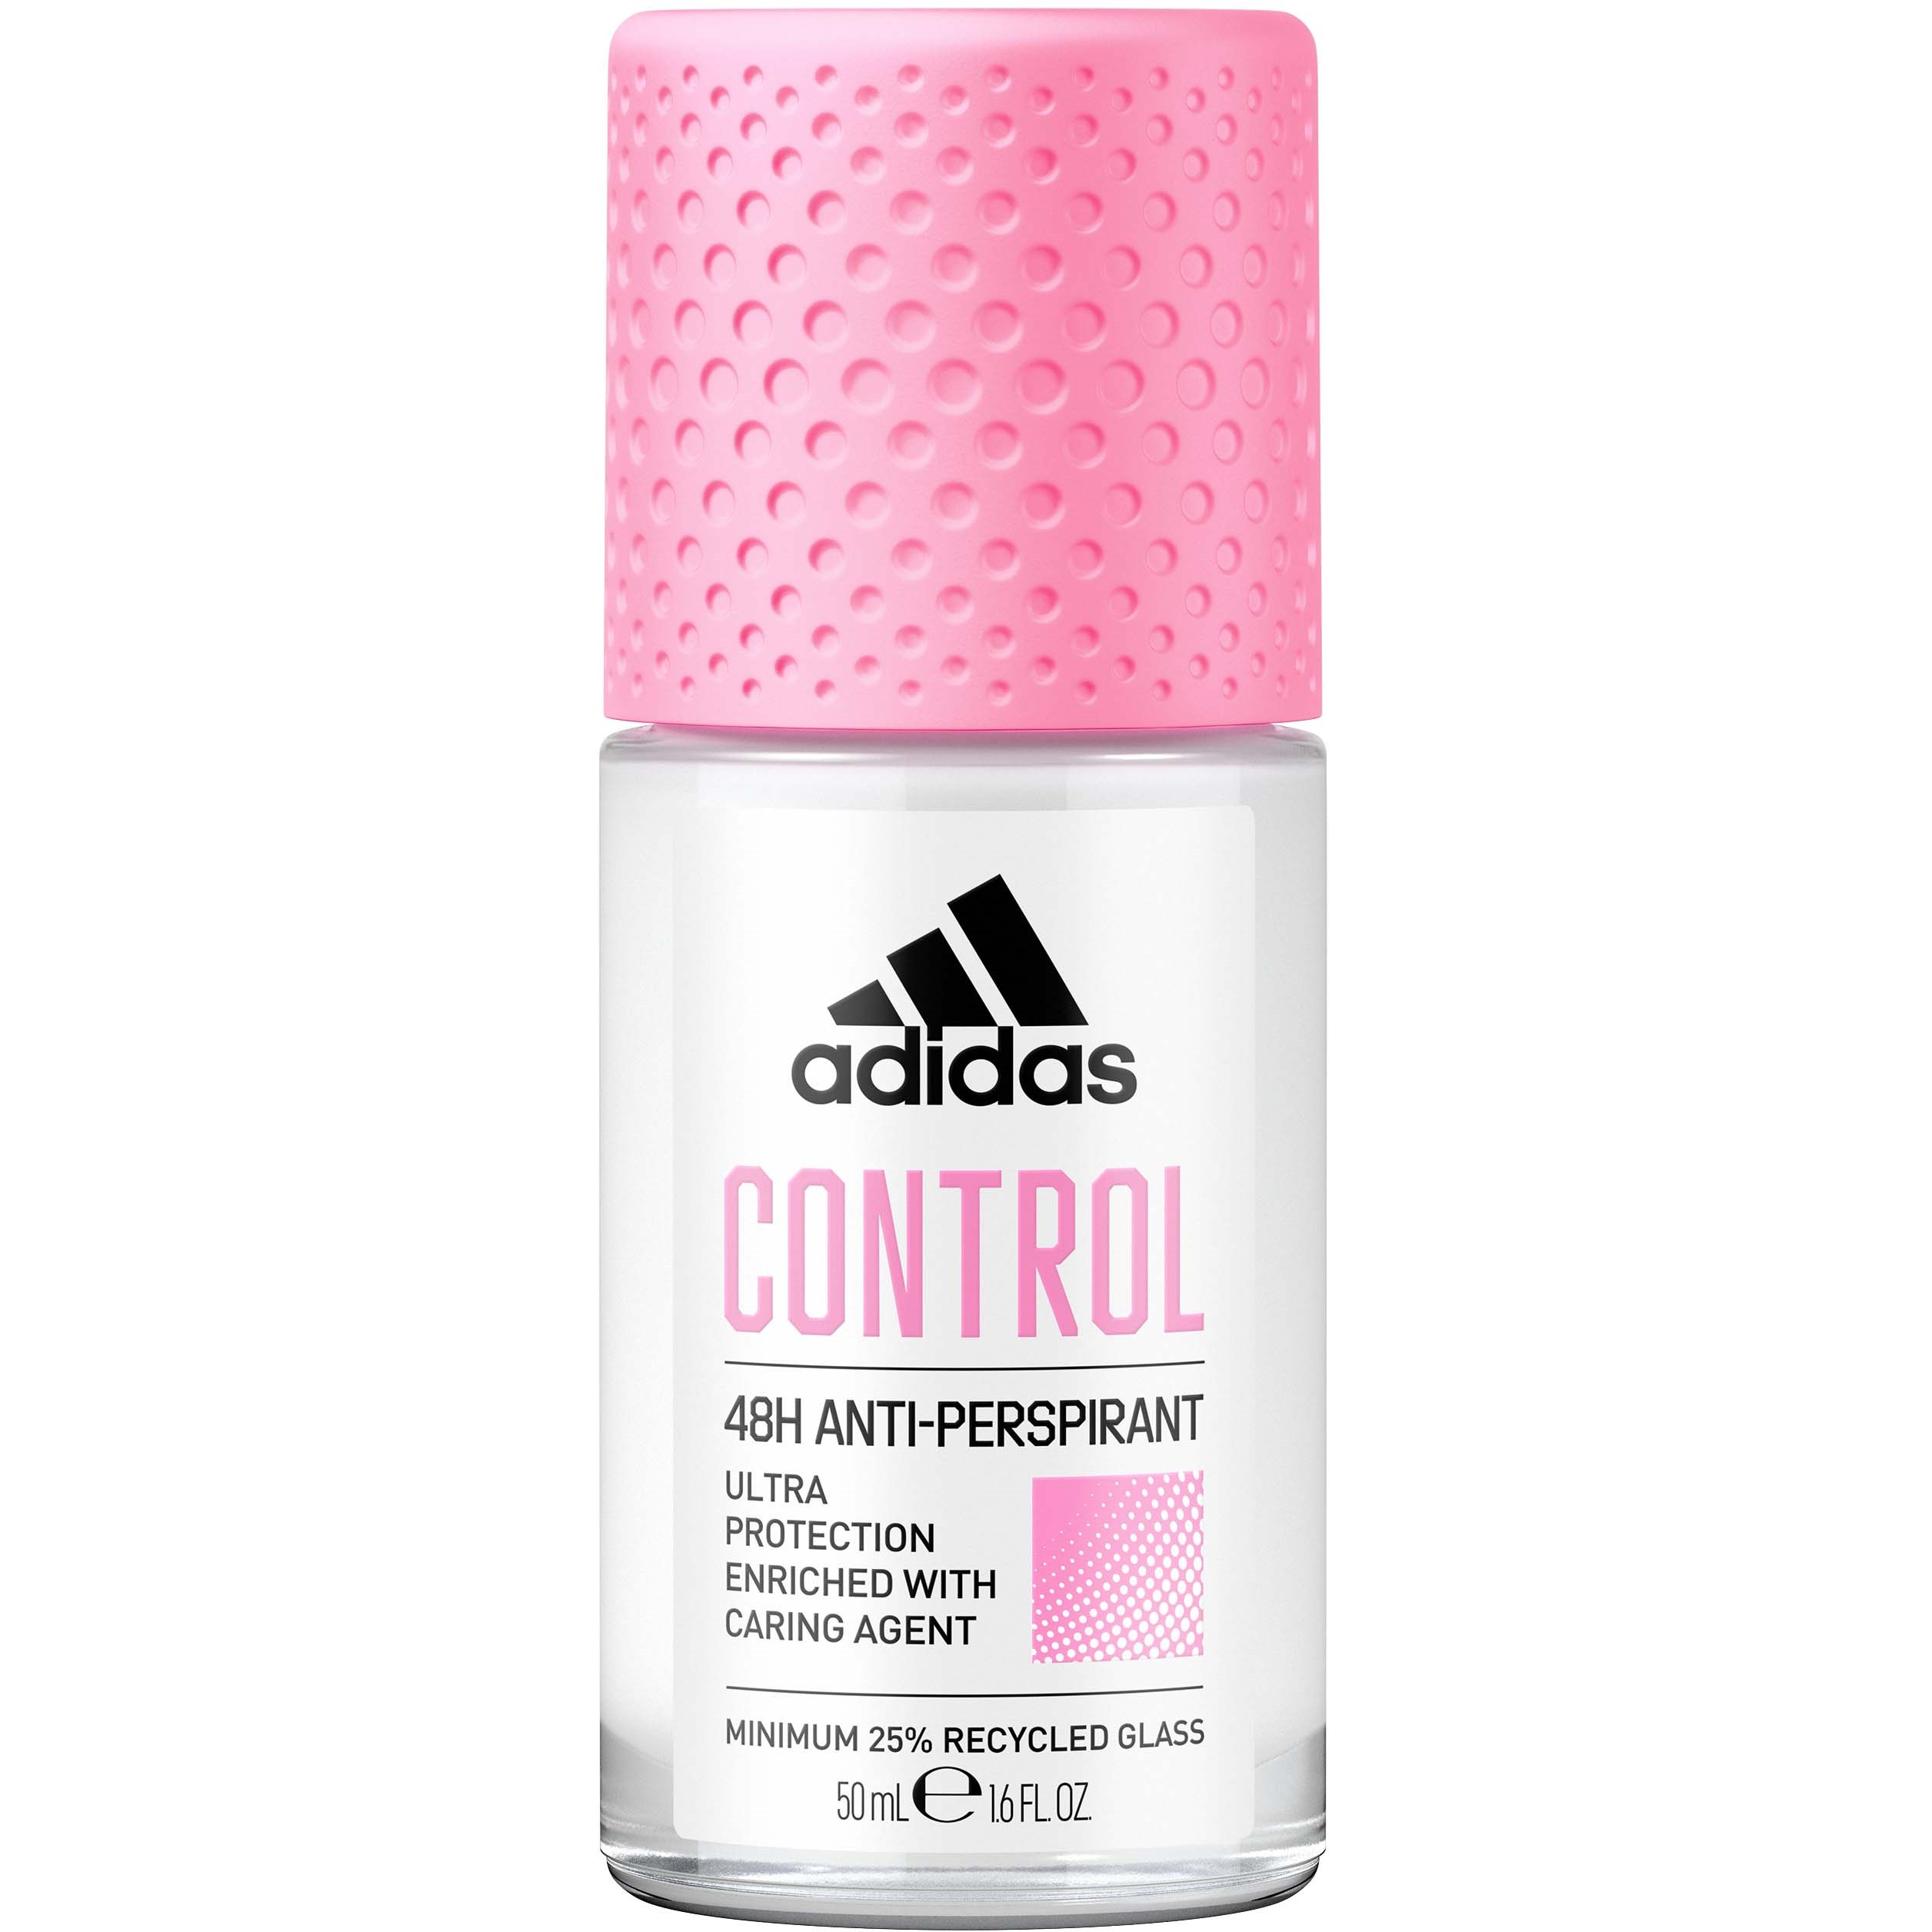 Zdjęcia - Dezodorant Adidas Control 48H Anti-Perspirant 50 ml 